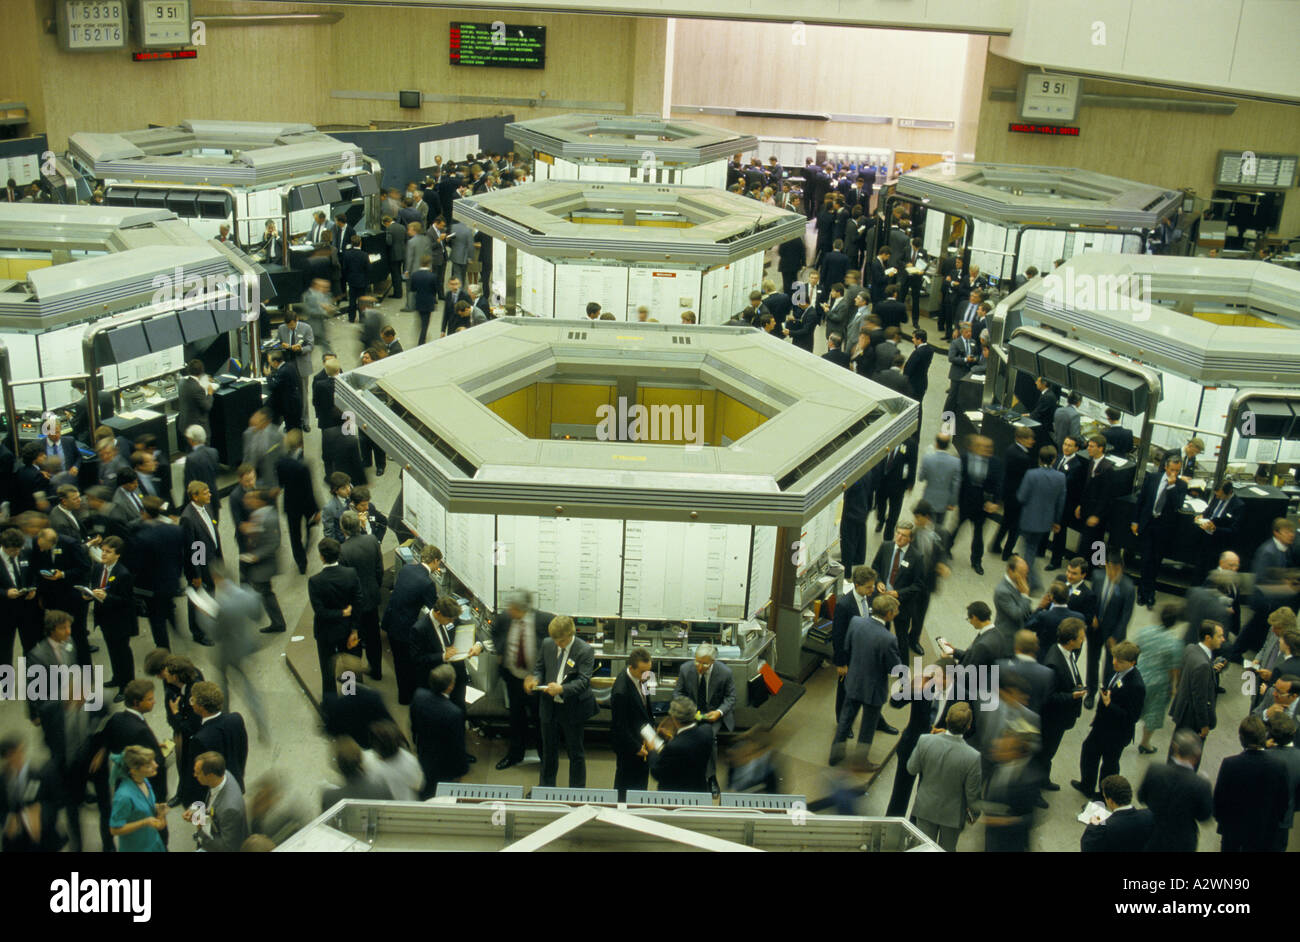 london stock exchange floor trading